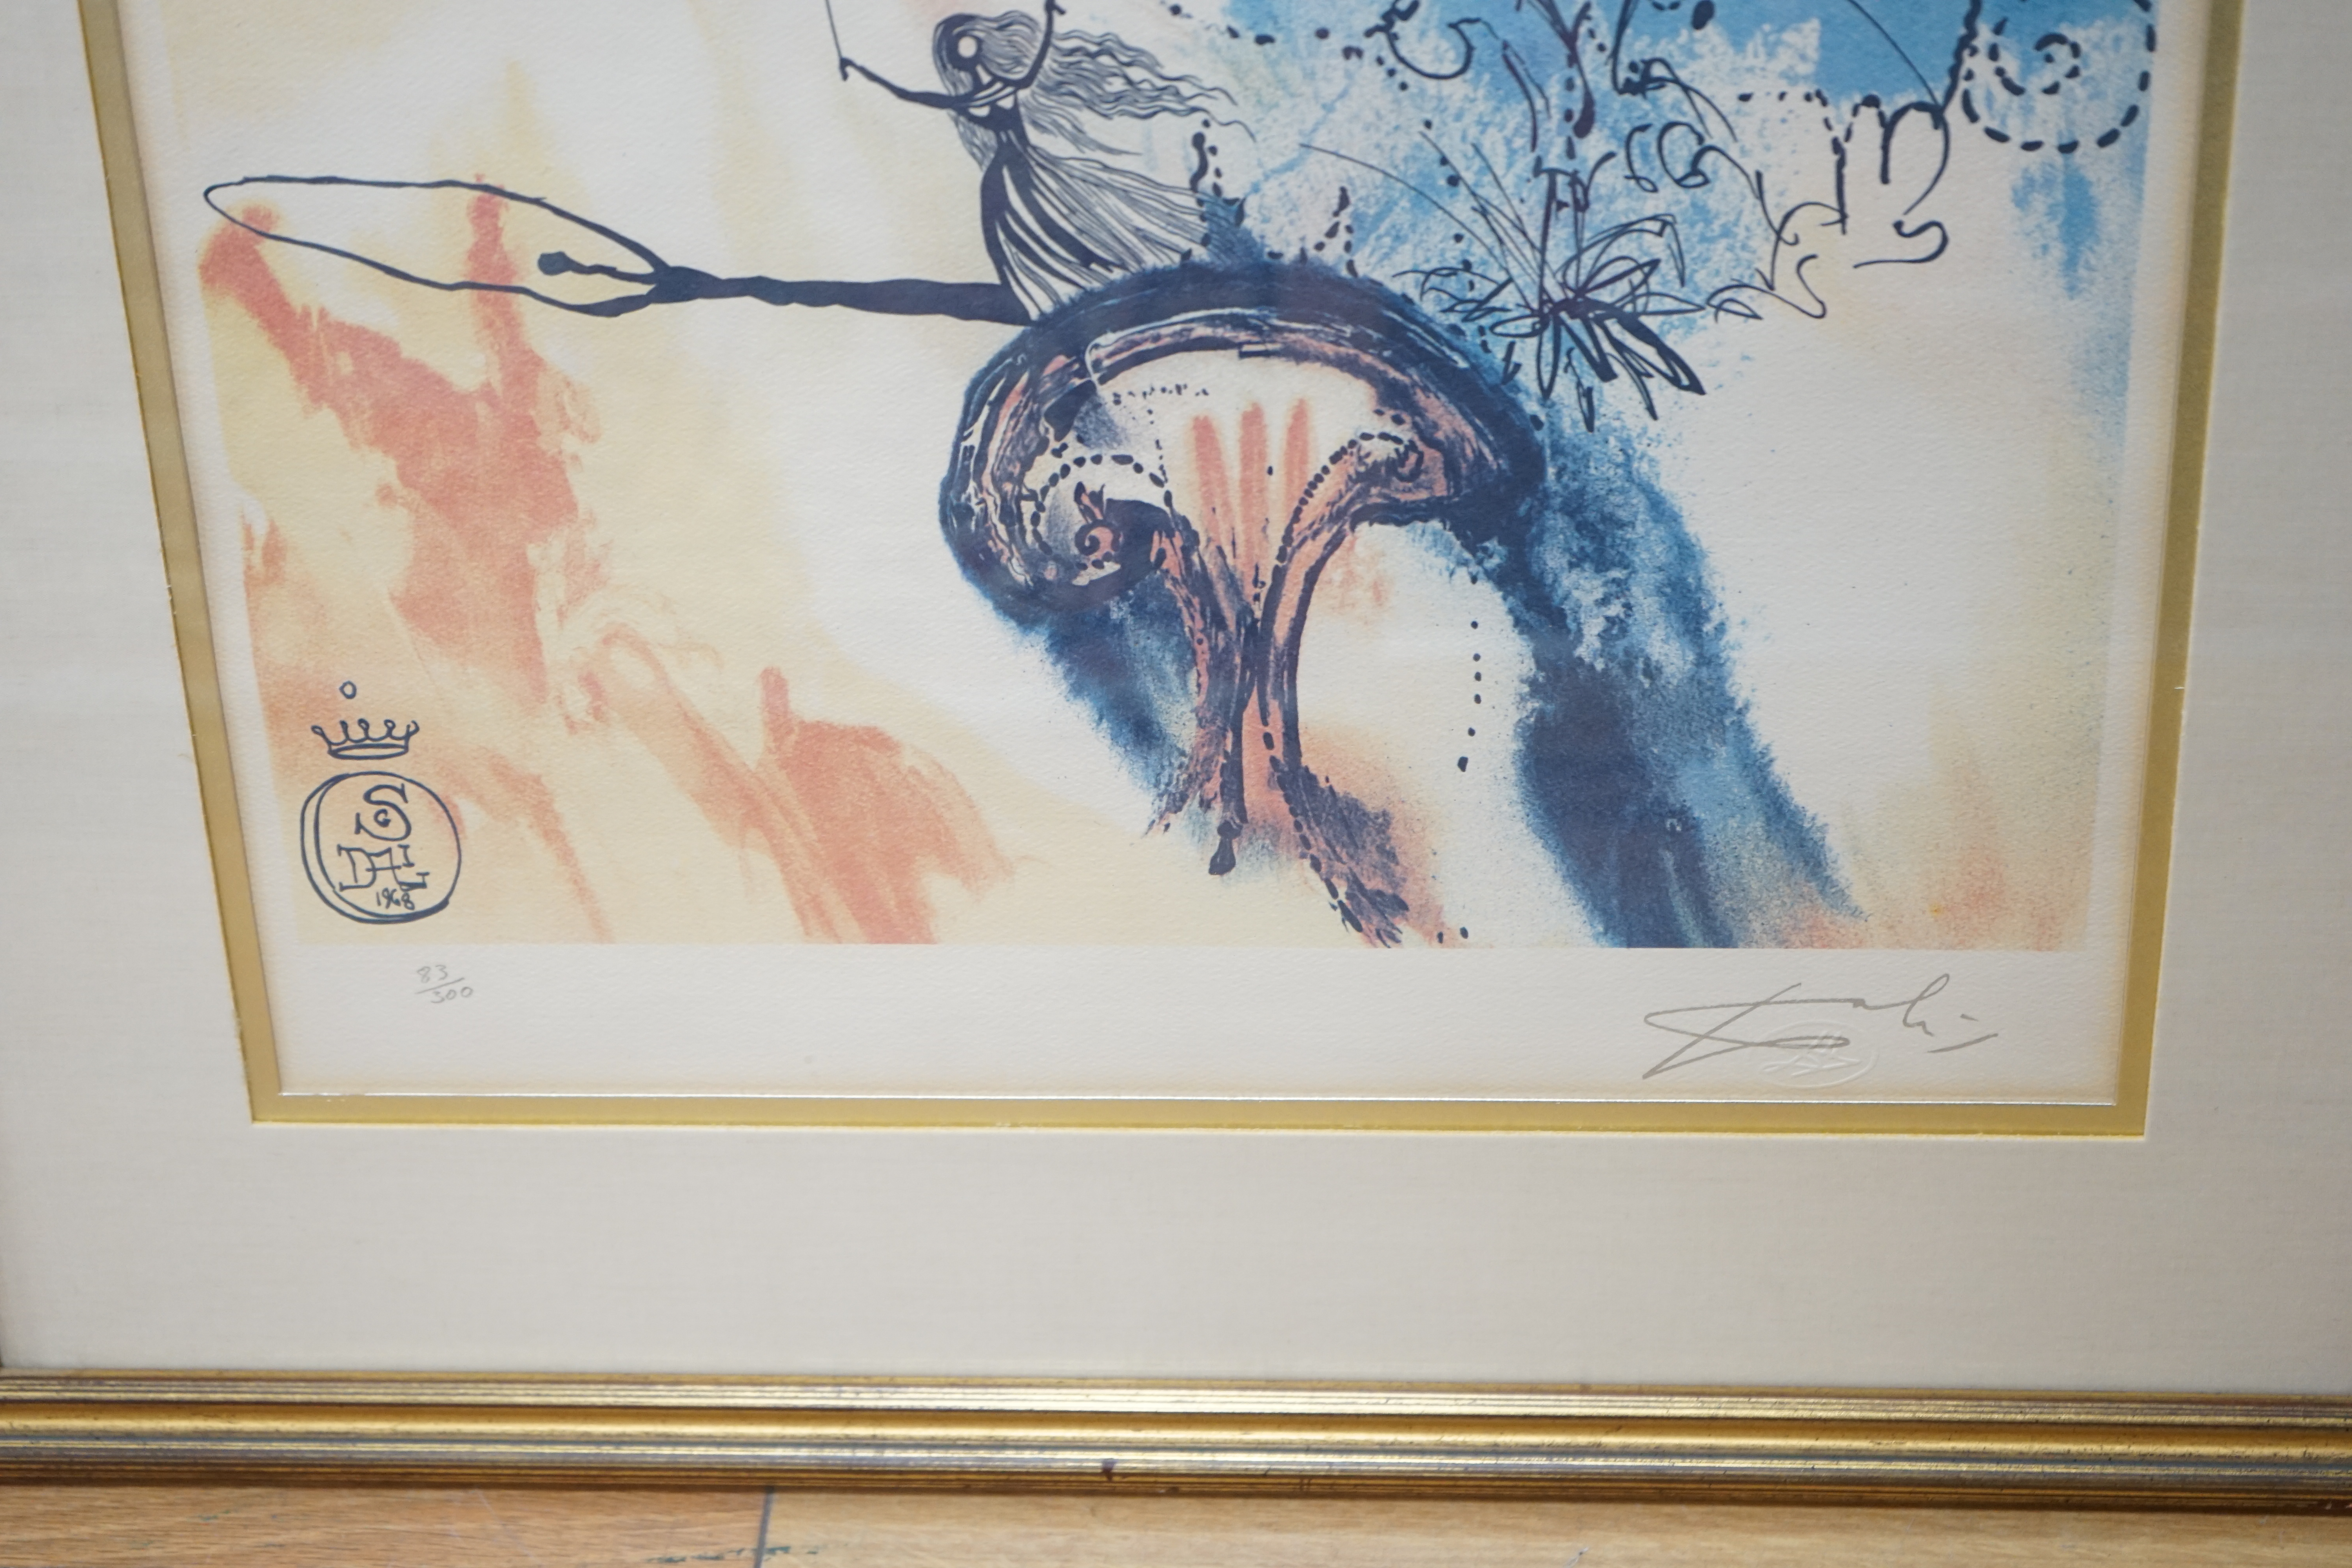 Salvador Dali (Spanish 1904-1989), colour lithograph, Alice in Wonderland, ‘Down the Rabbit Hole’, pencil numbered 83/300, facsimile signature, certificate of authenticity verso 56 x 37cm. Condition - fair